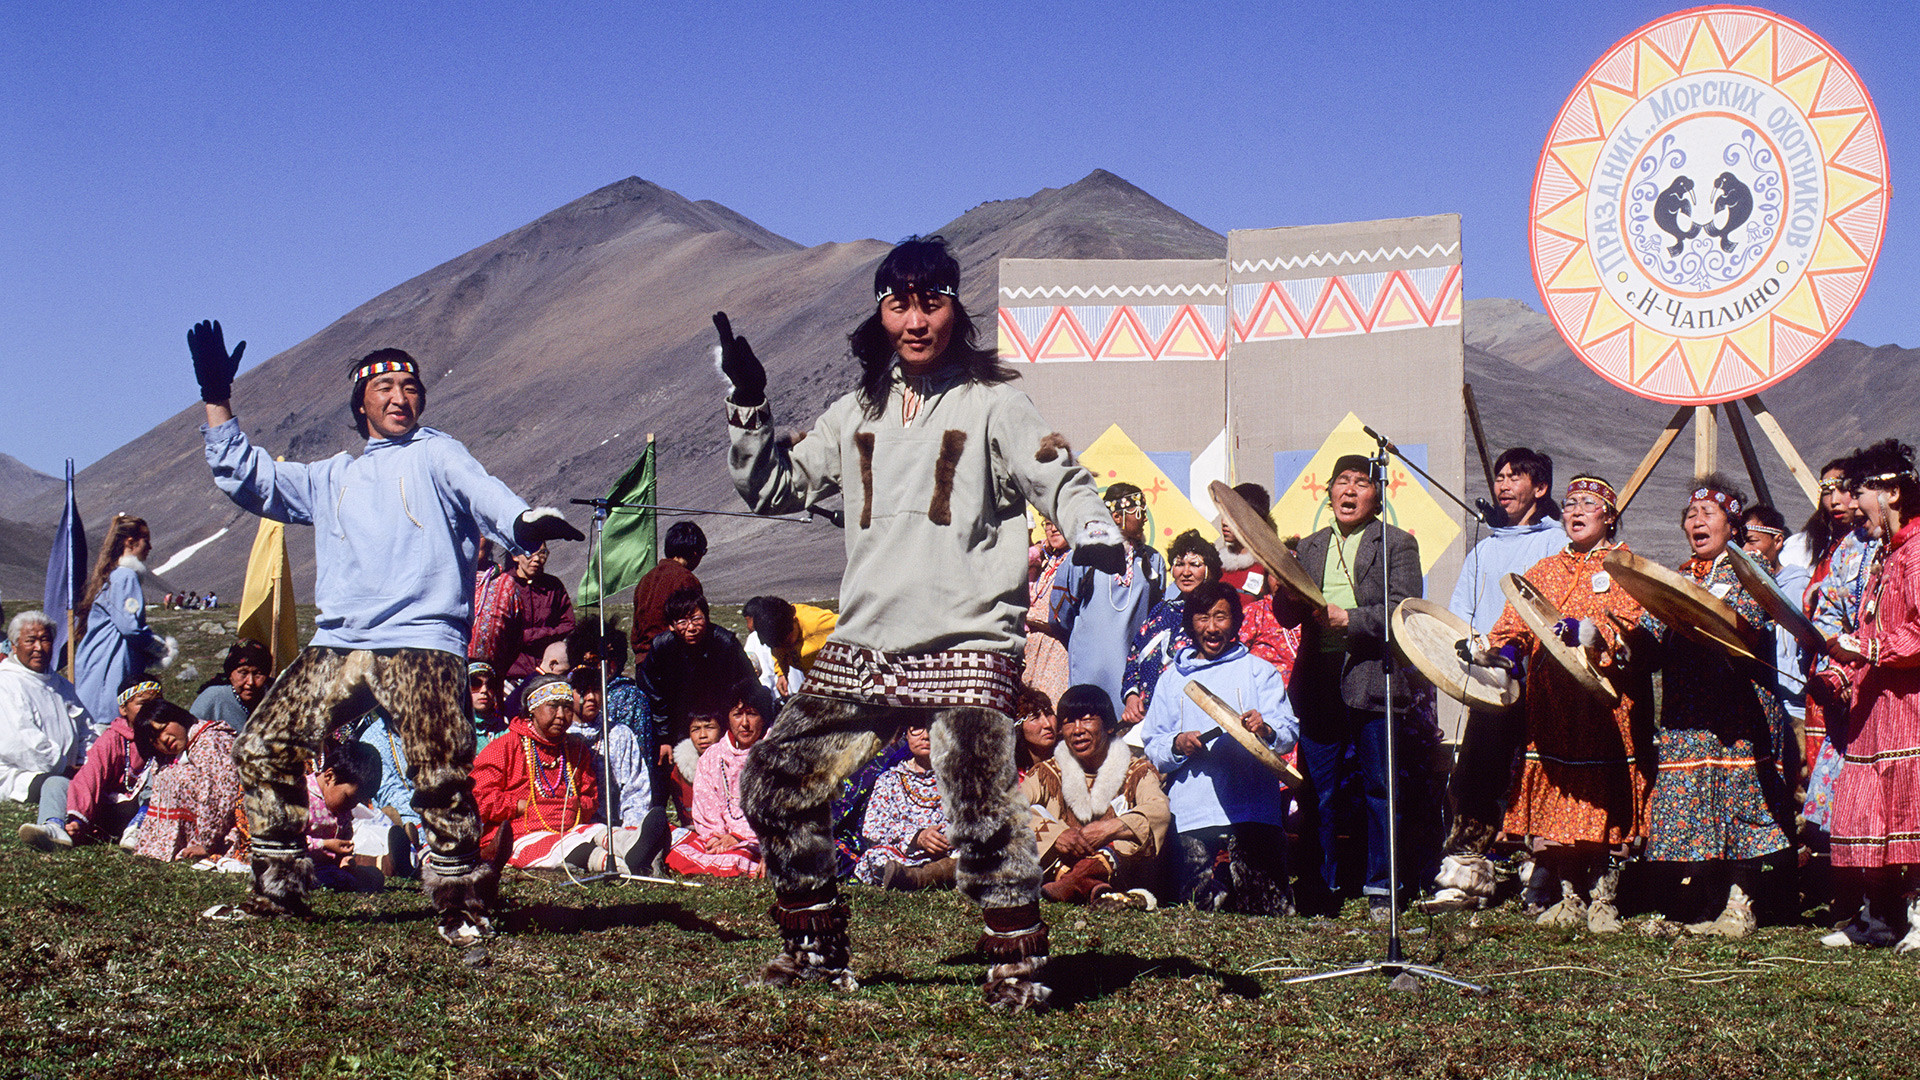 Russia, Magadan Region, Chukotskiy, Novoye Chaplino, Hunter's Festival, Traditional Dances.